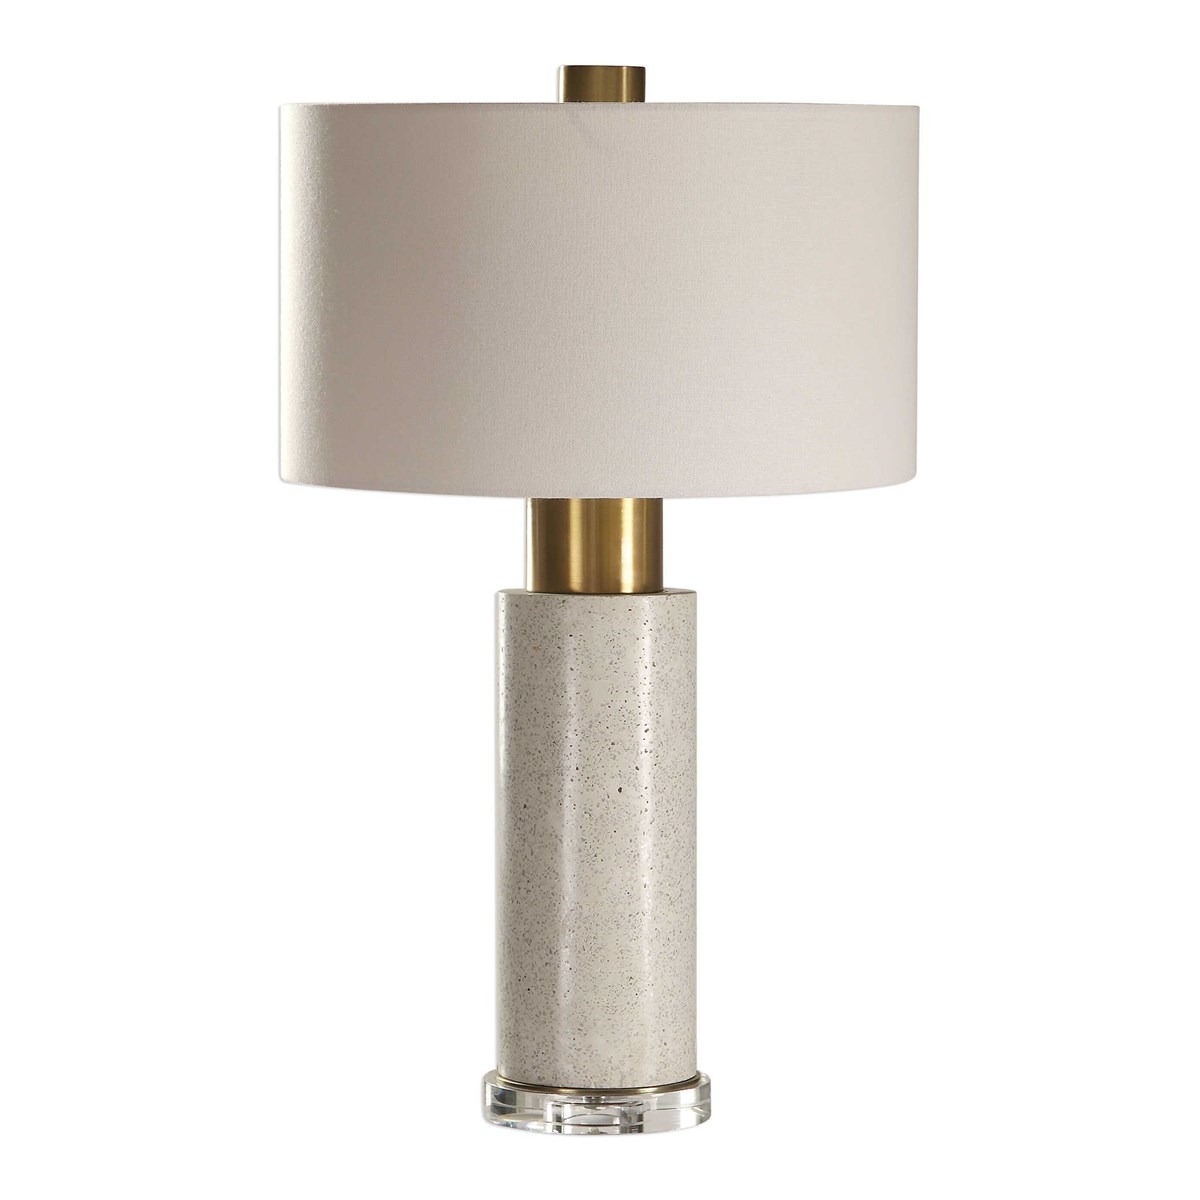 VAESHON TABLE LAMP - Image 0